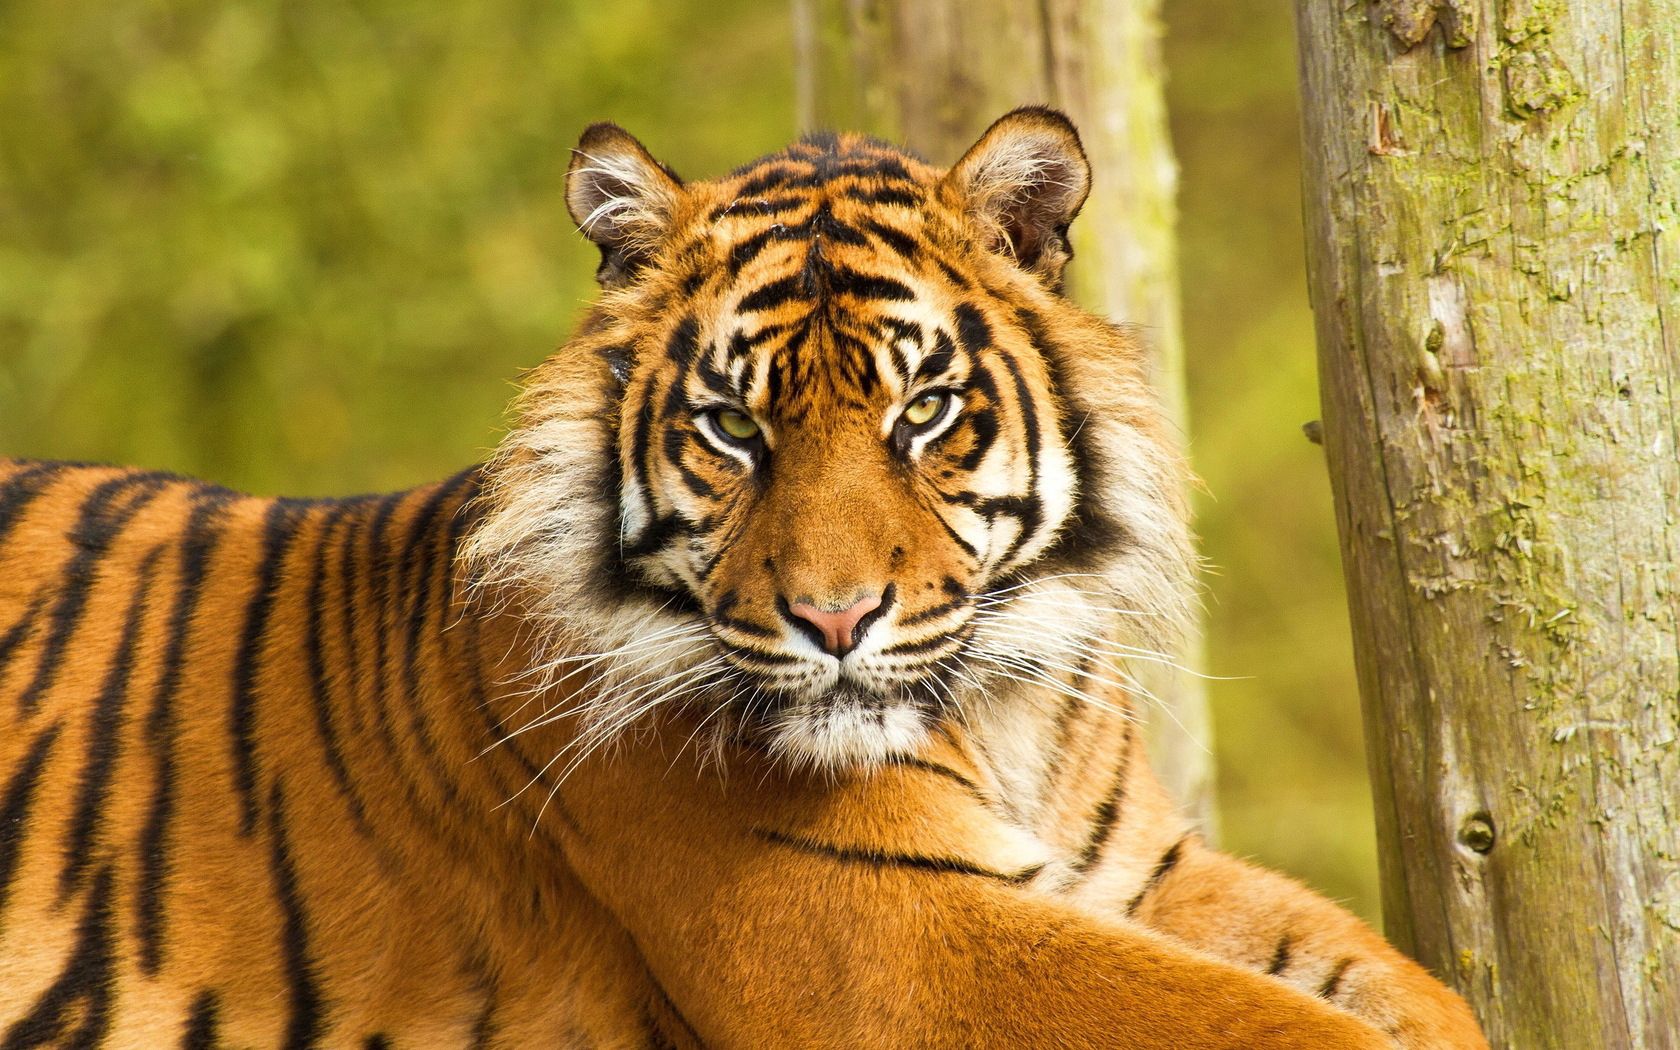 155706 descargar imagen animales, rayas, sentarse, bozal, rayado, depredador, gato grande, tigre: fondos de pantalla y protectores de pantalla gratis